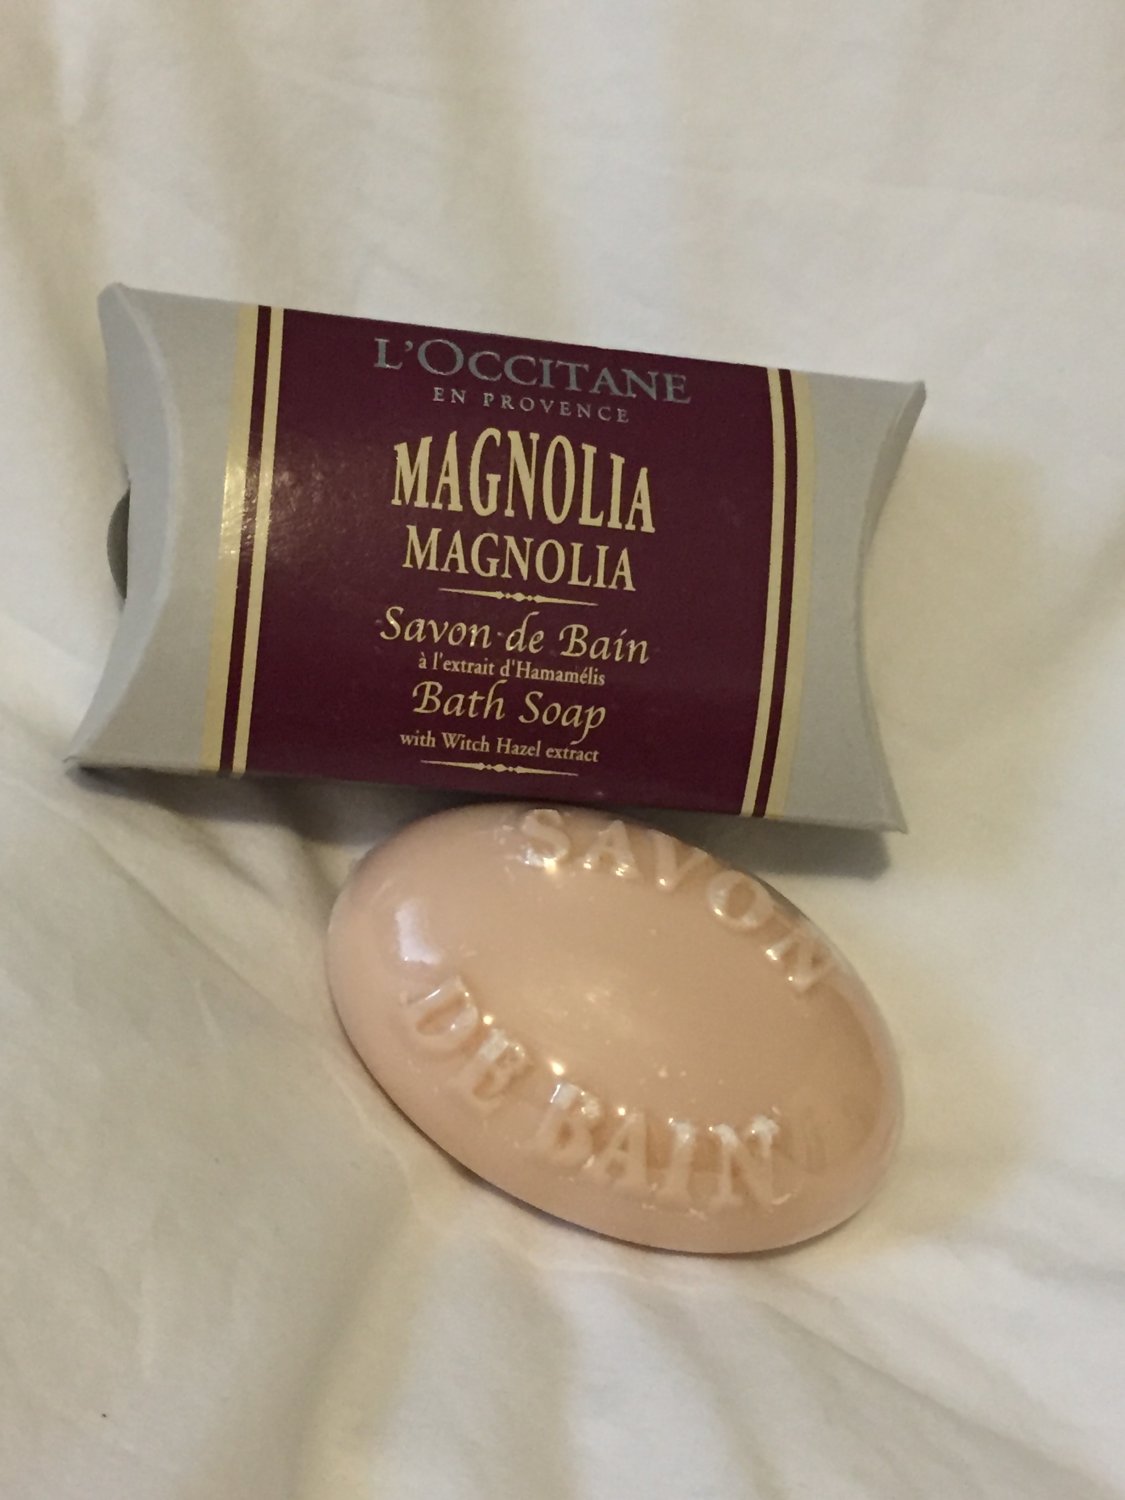 L'occitane Rose Magnolia Bath Soap  Savon de Bain  vintage large 5.2 oz. Loccitane